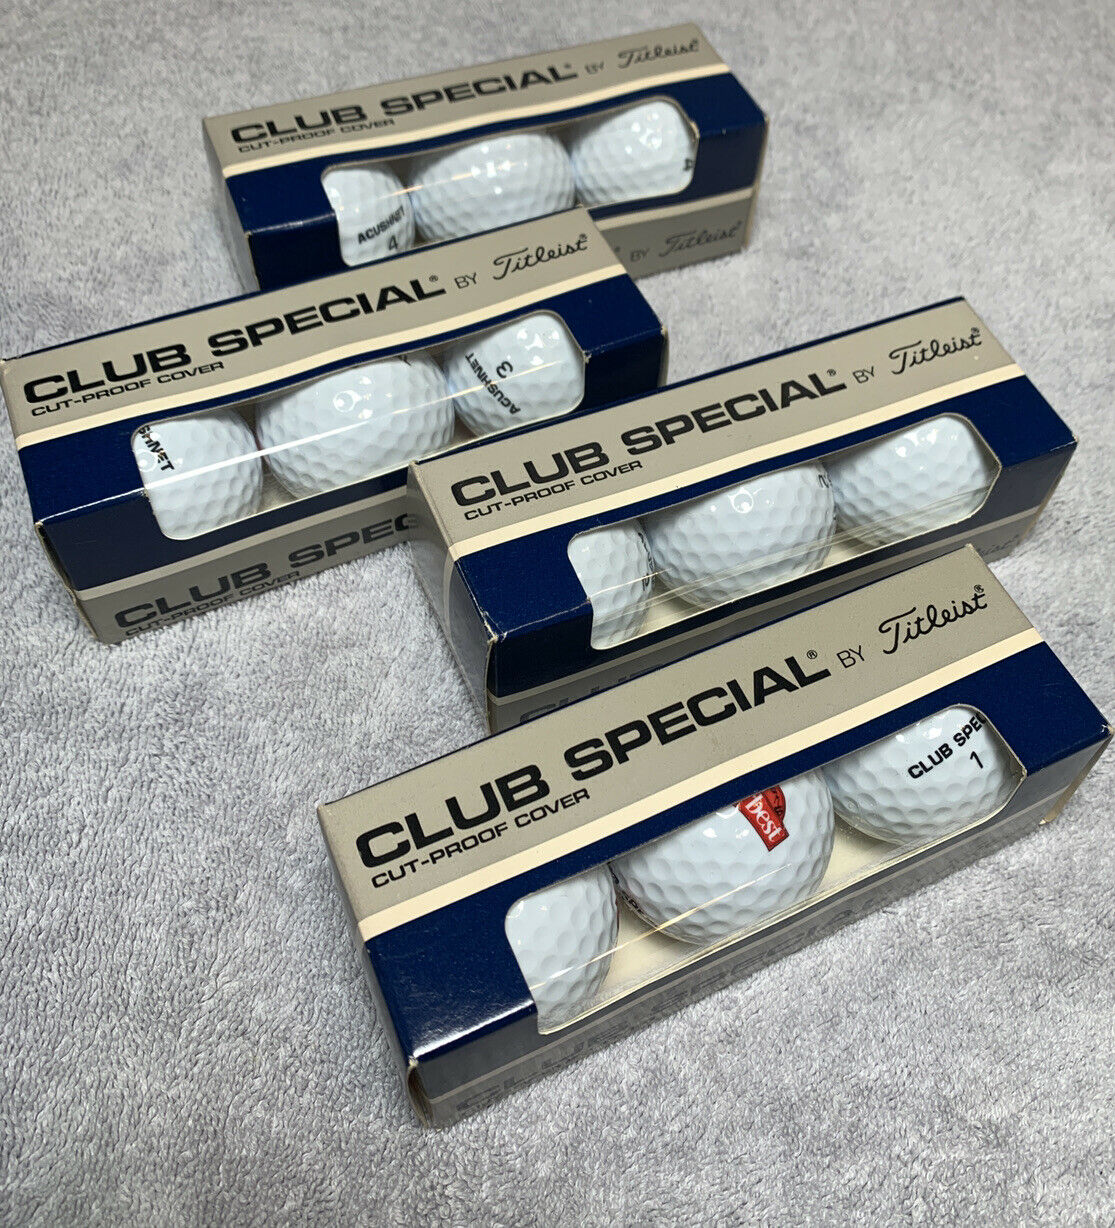 Vintage Club Special By Titleist - 3x Golf Balls Cut-proof Acushnet